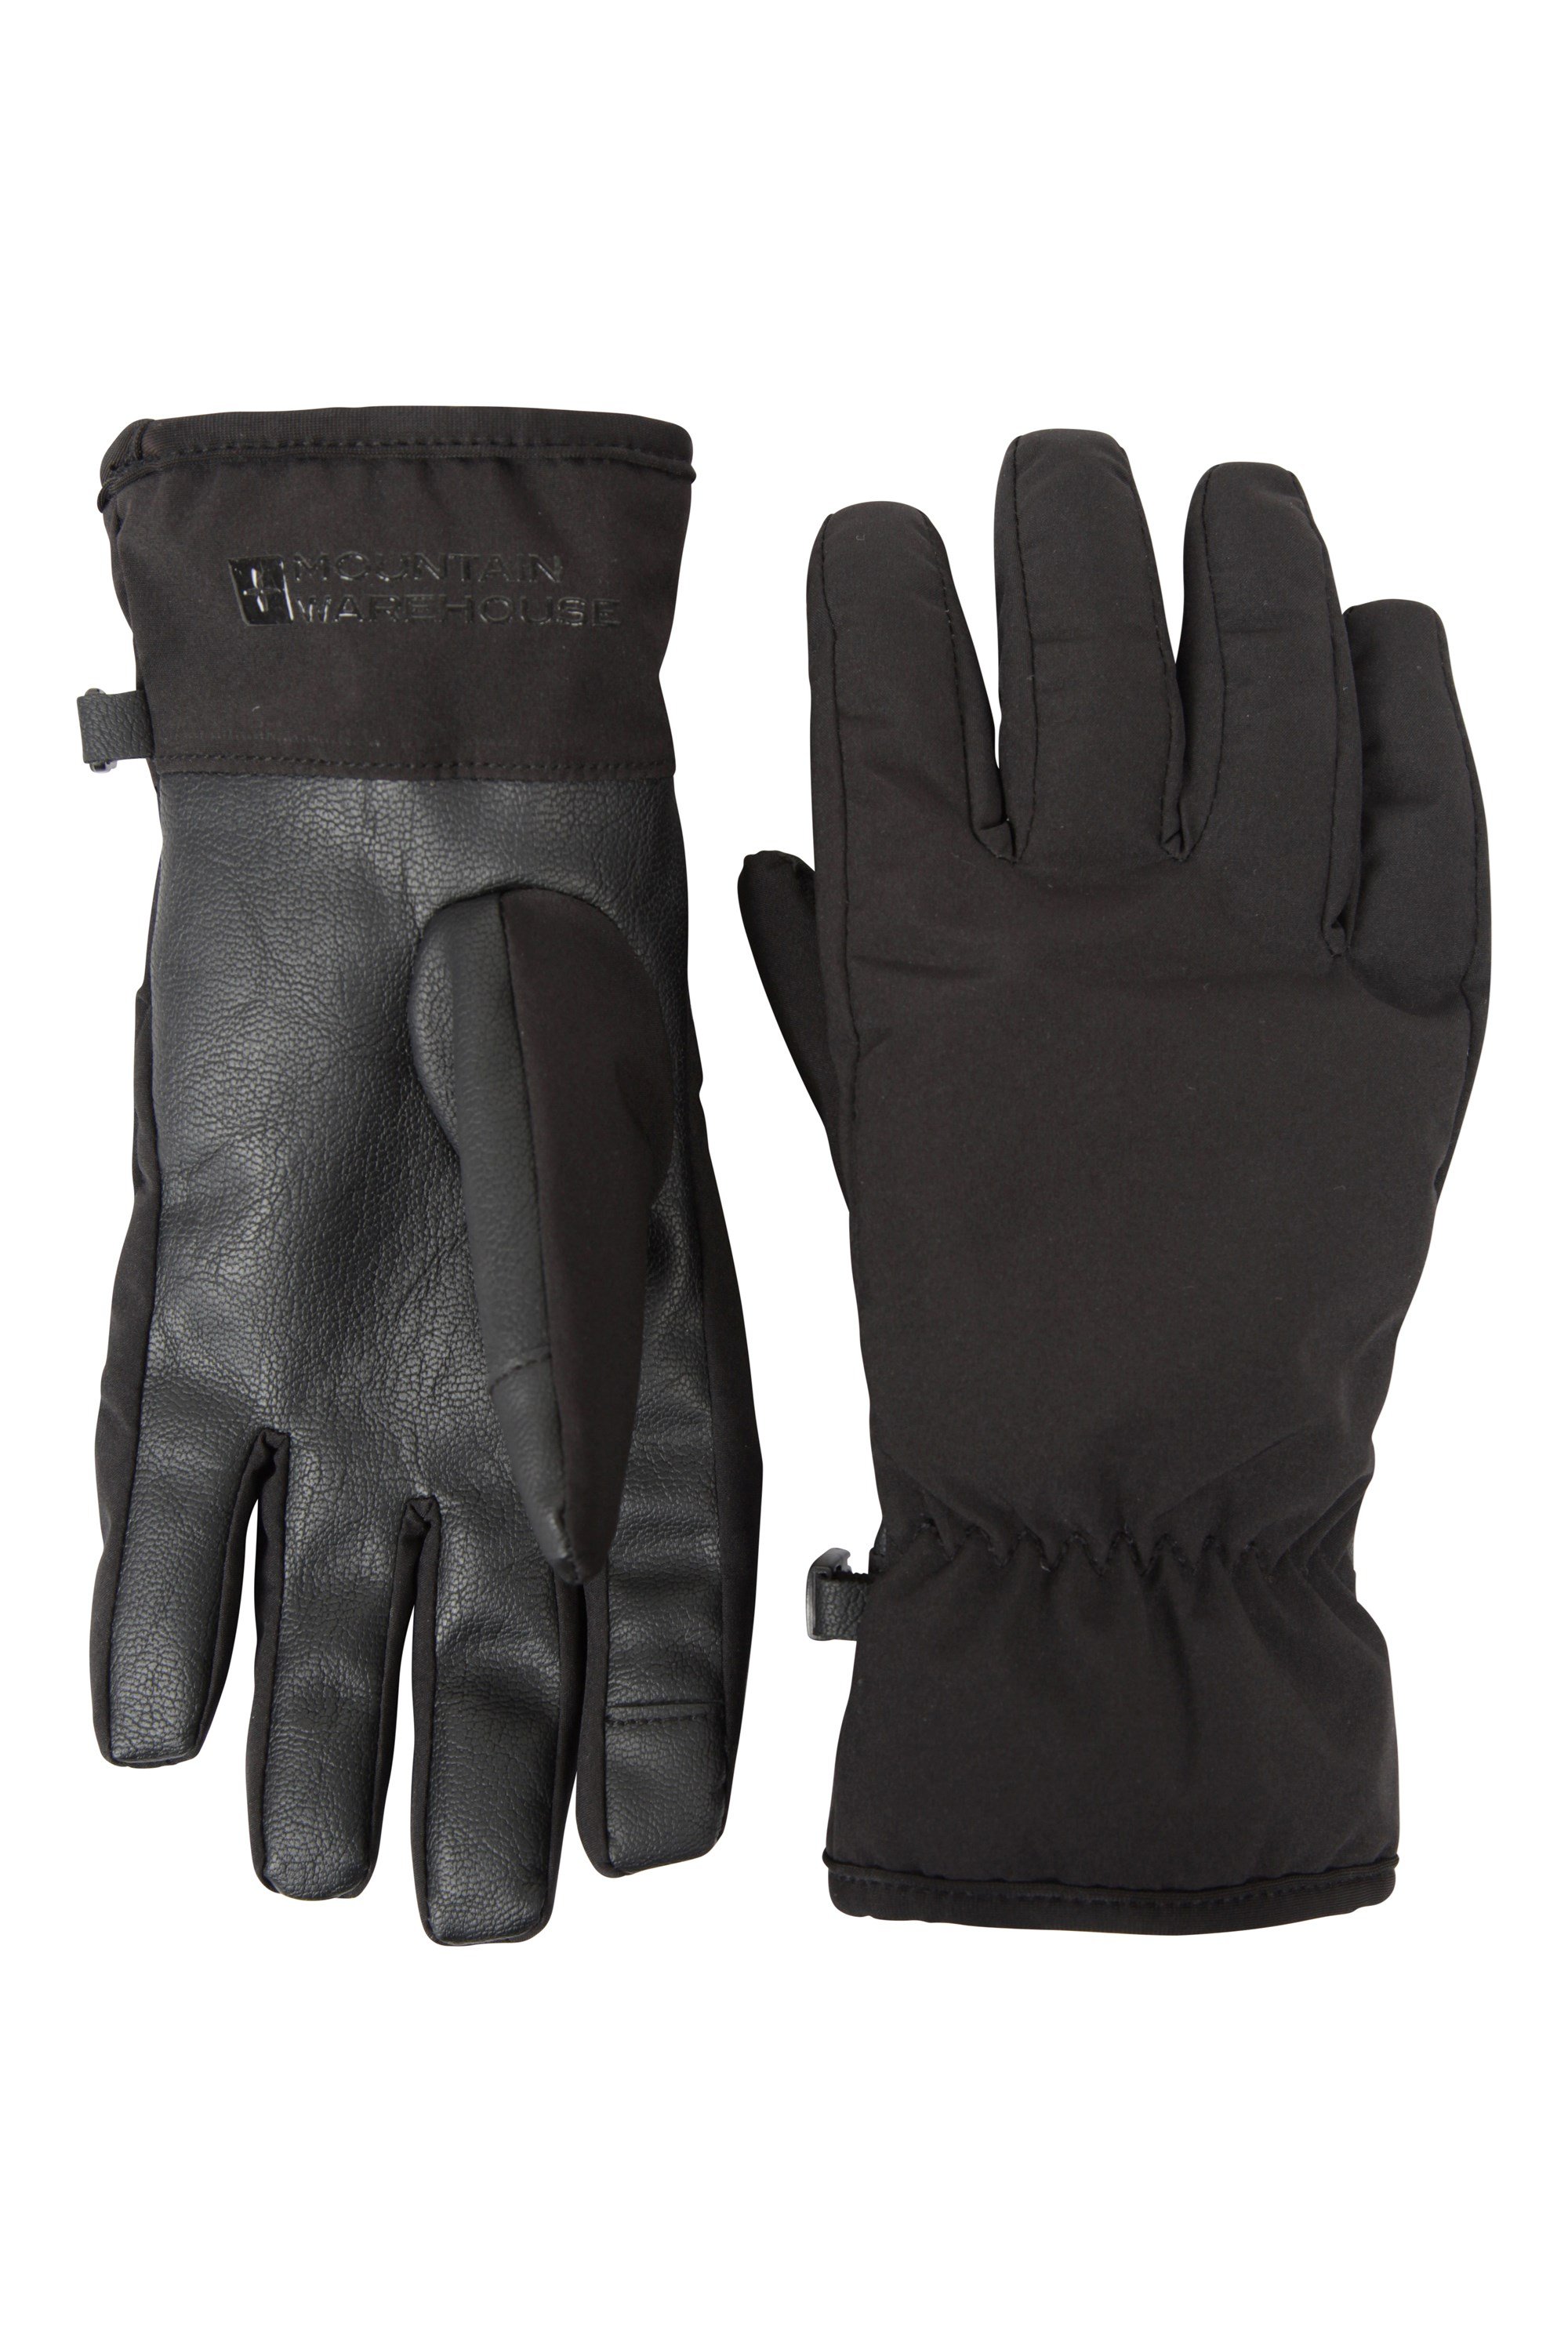 Hurricane Womens Extreme Windproof Glove - Black